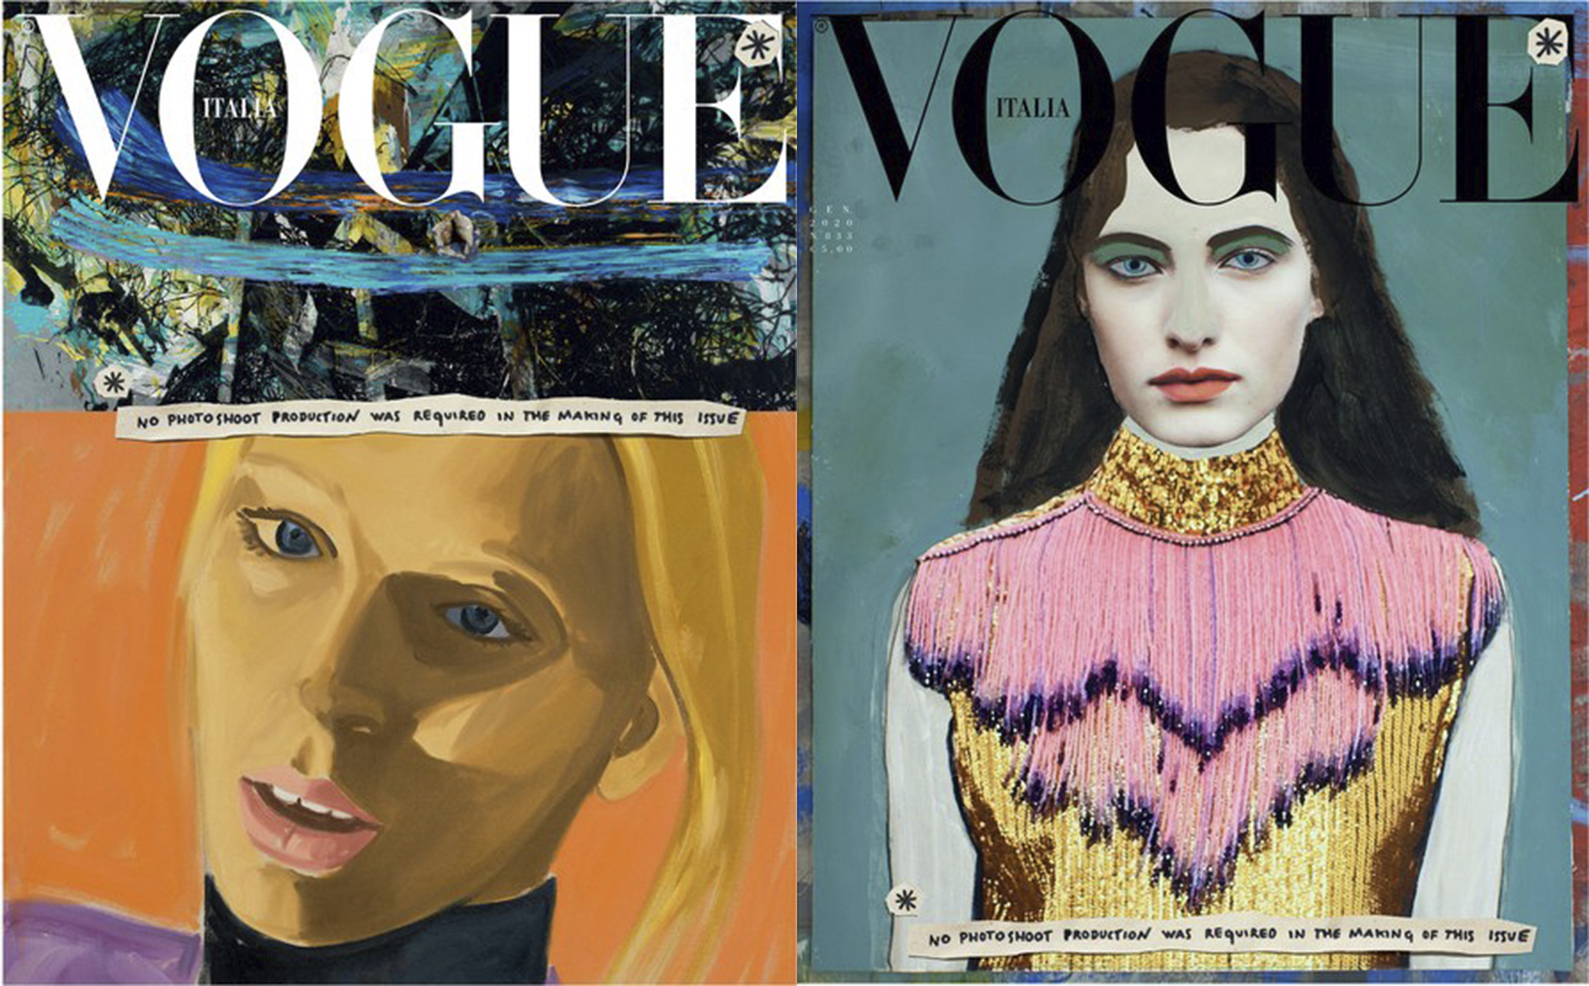 New 'Vogue Italia' cover illustrations. (Condé Nast—David Salle and Paolo Ventura for Vogue Italia)